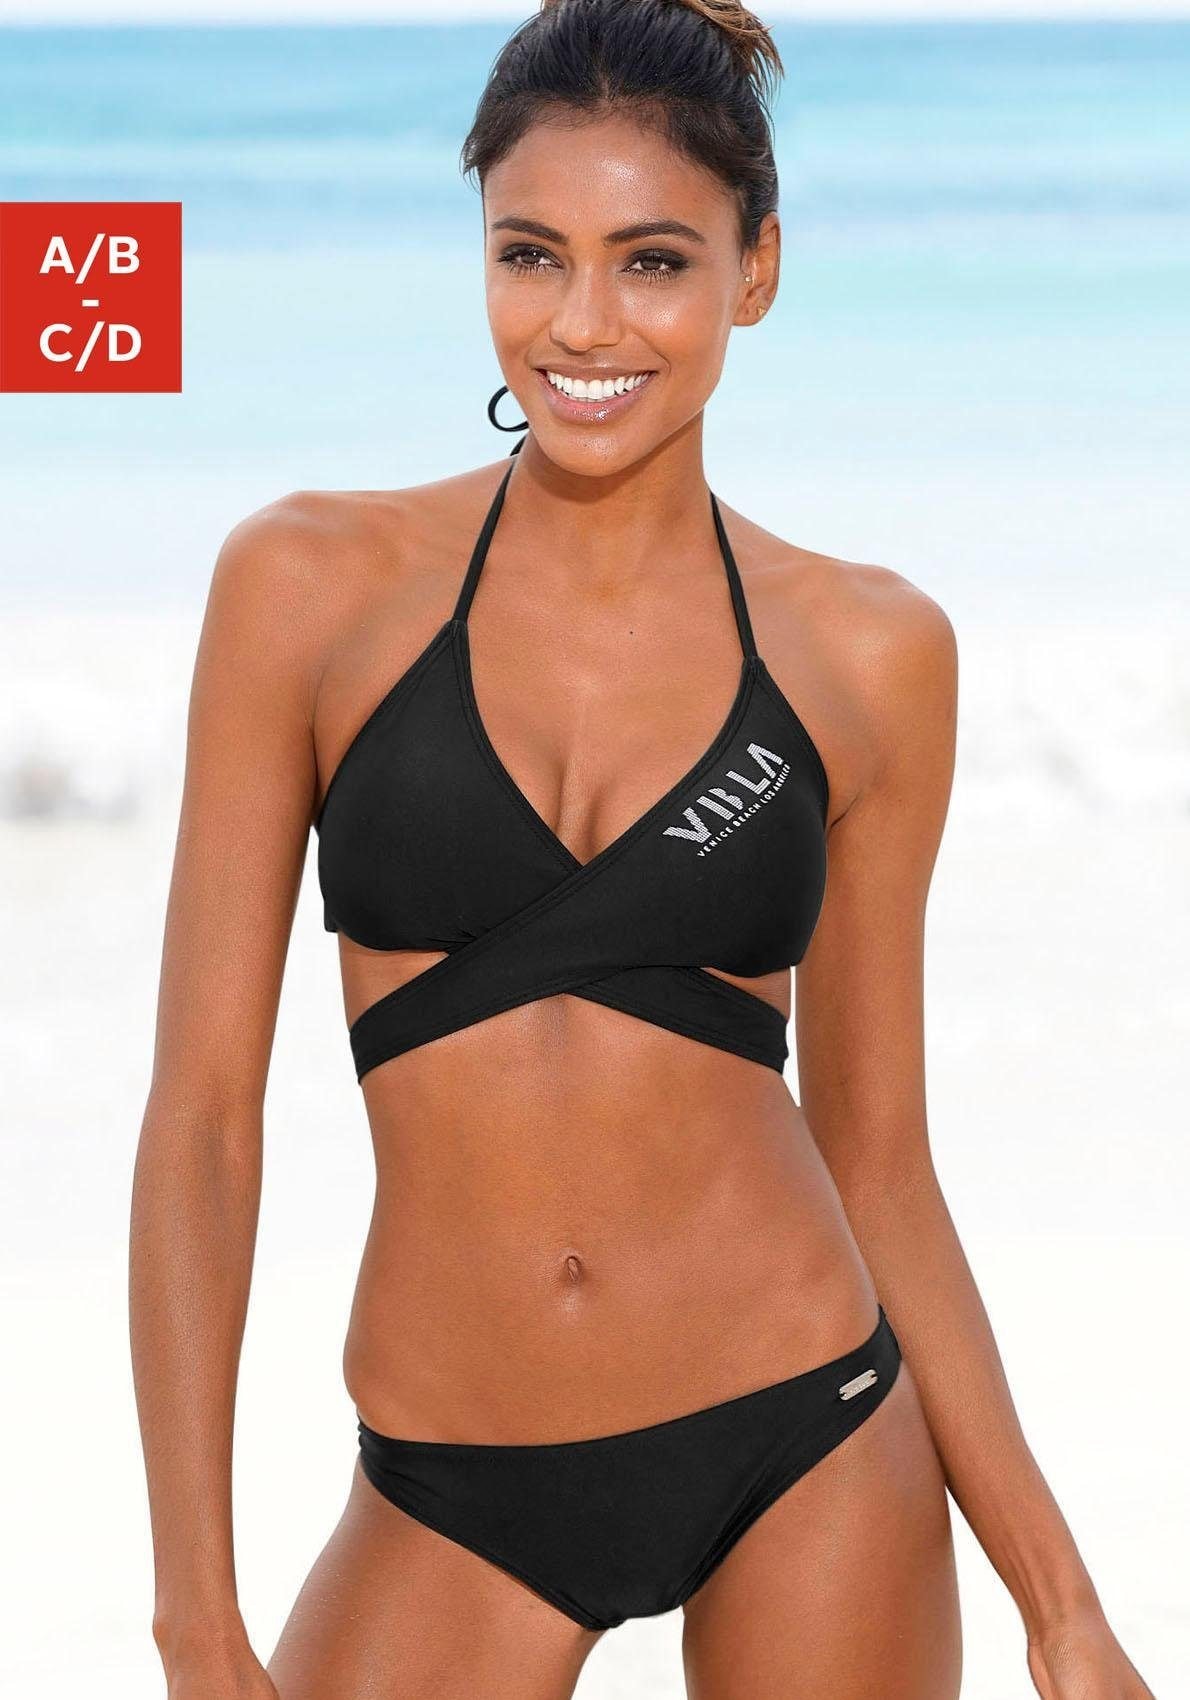 Venice Beach Triangel-Bikini, mit Top zum Wickeln